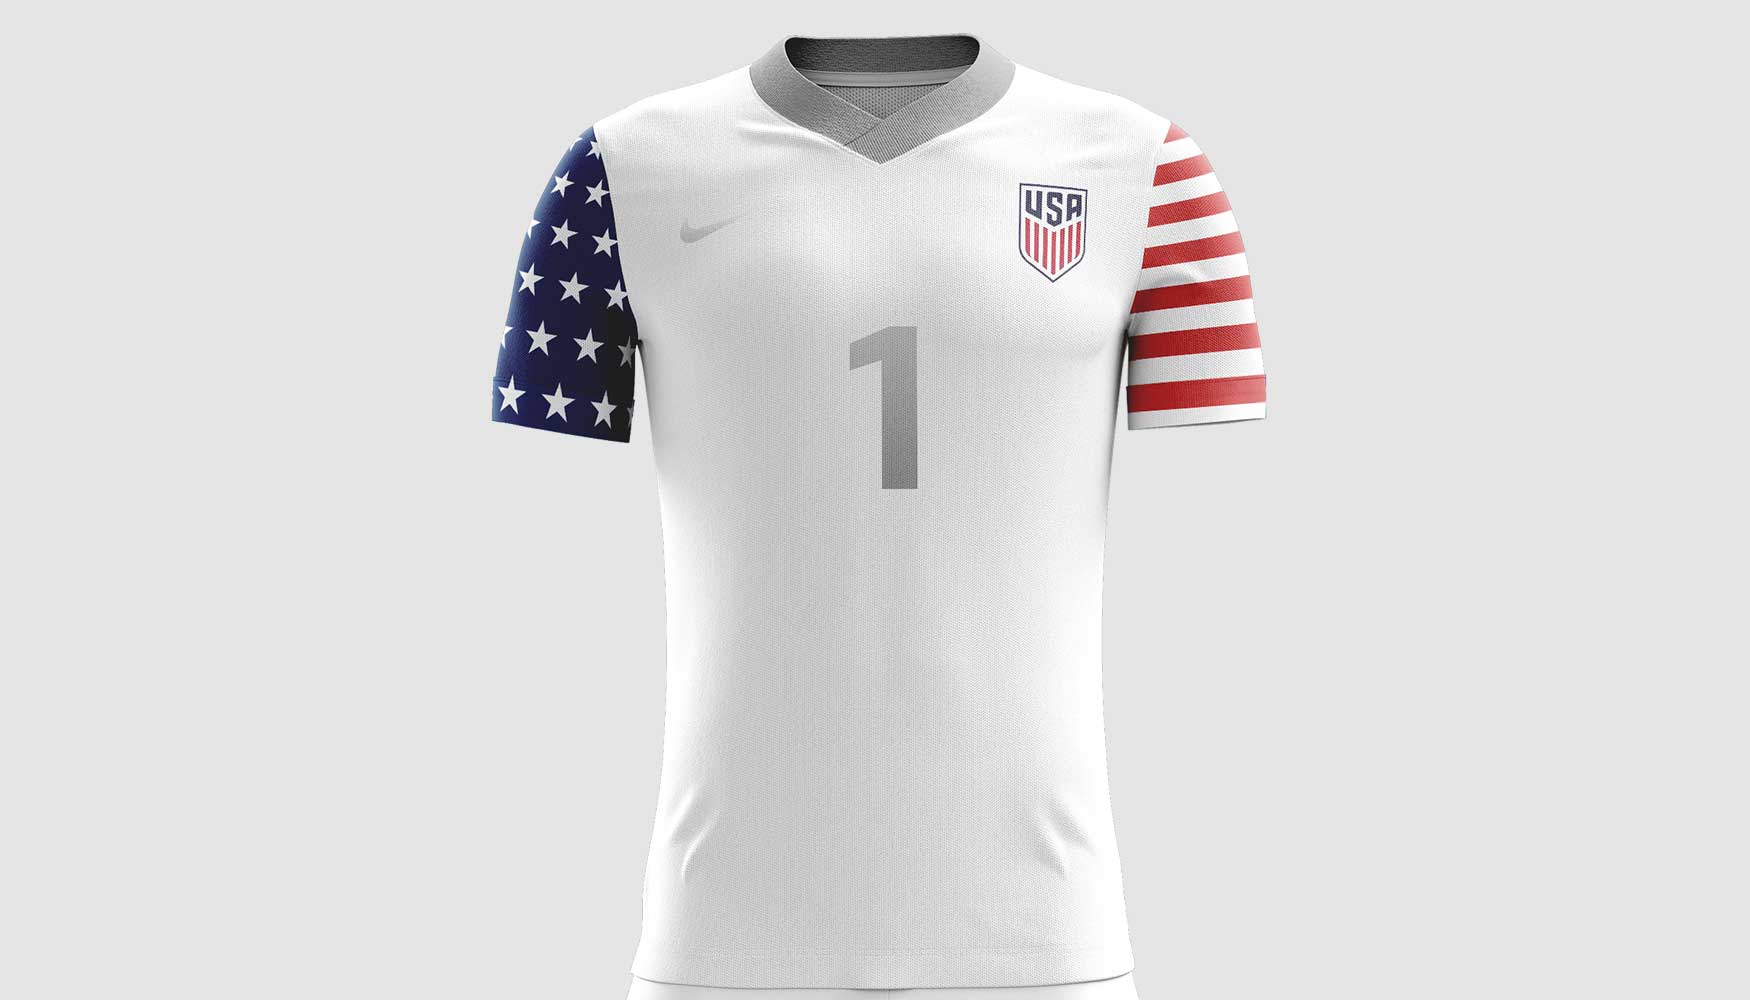 Concept Nike US Soccer Jersey Designs - USMNT Jersey Concepts